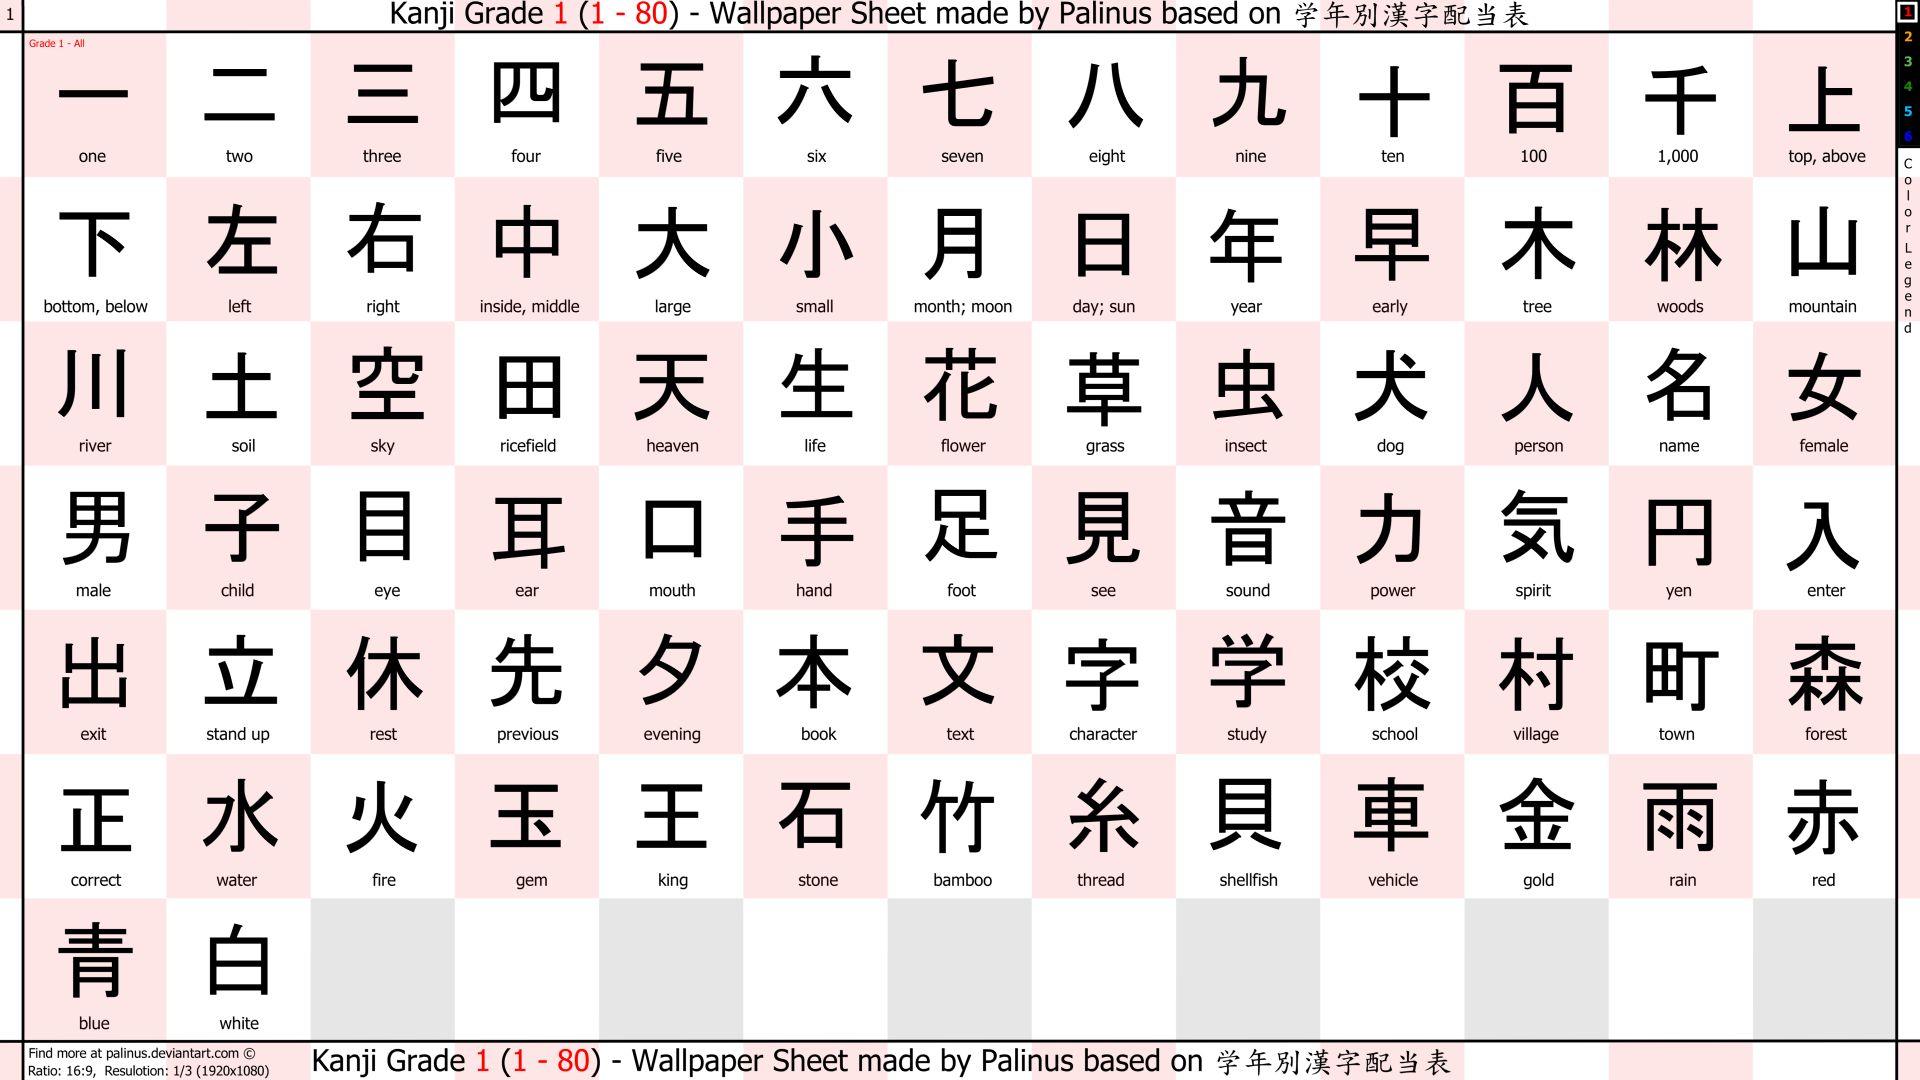 Beginner's Guide to Kanji, Hiragana and Katakana Japanese Writing